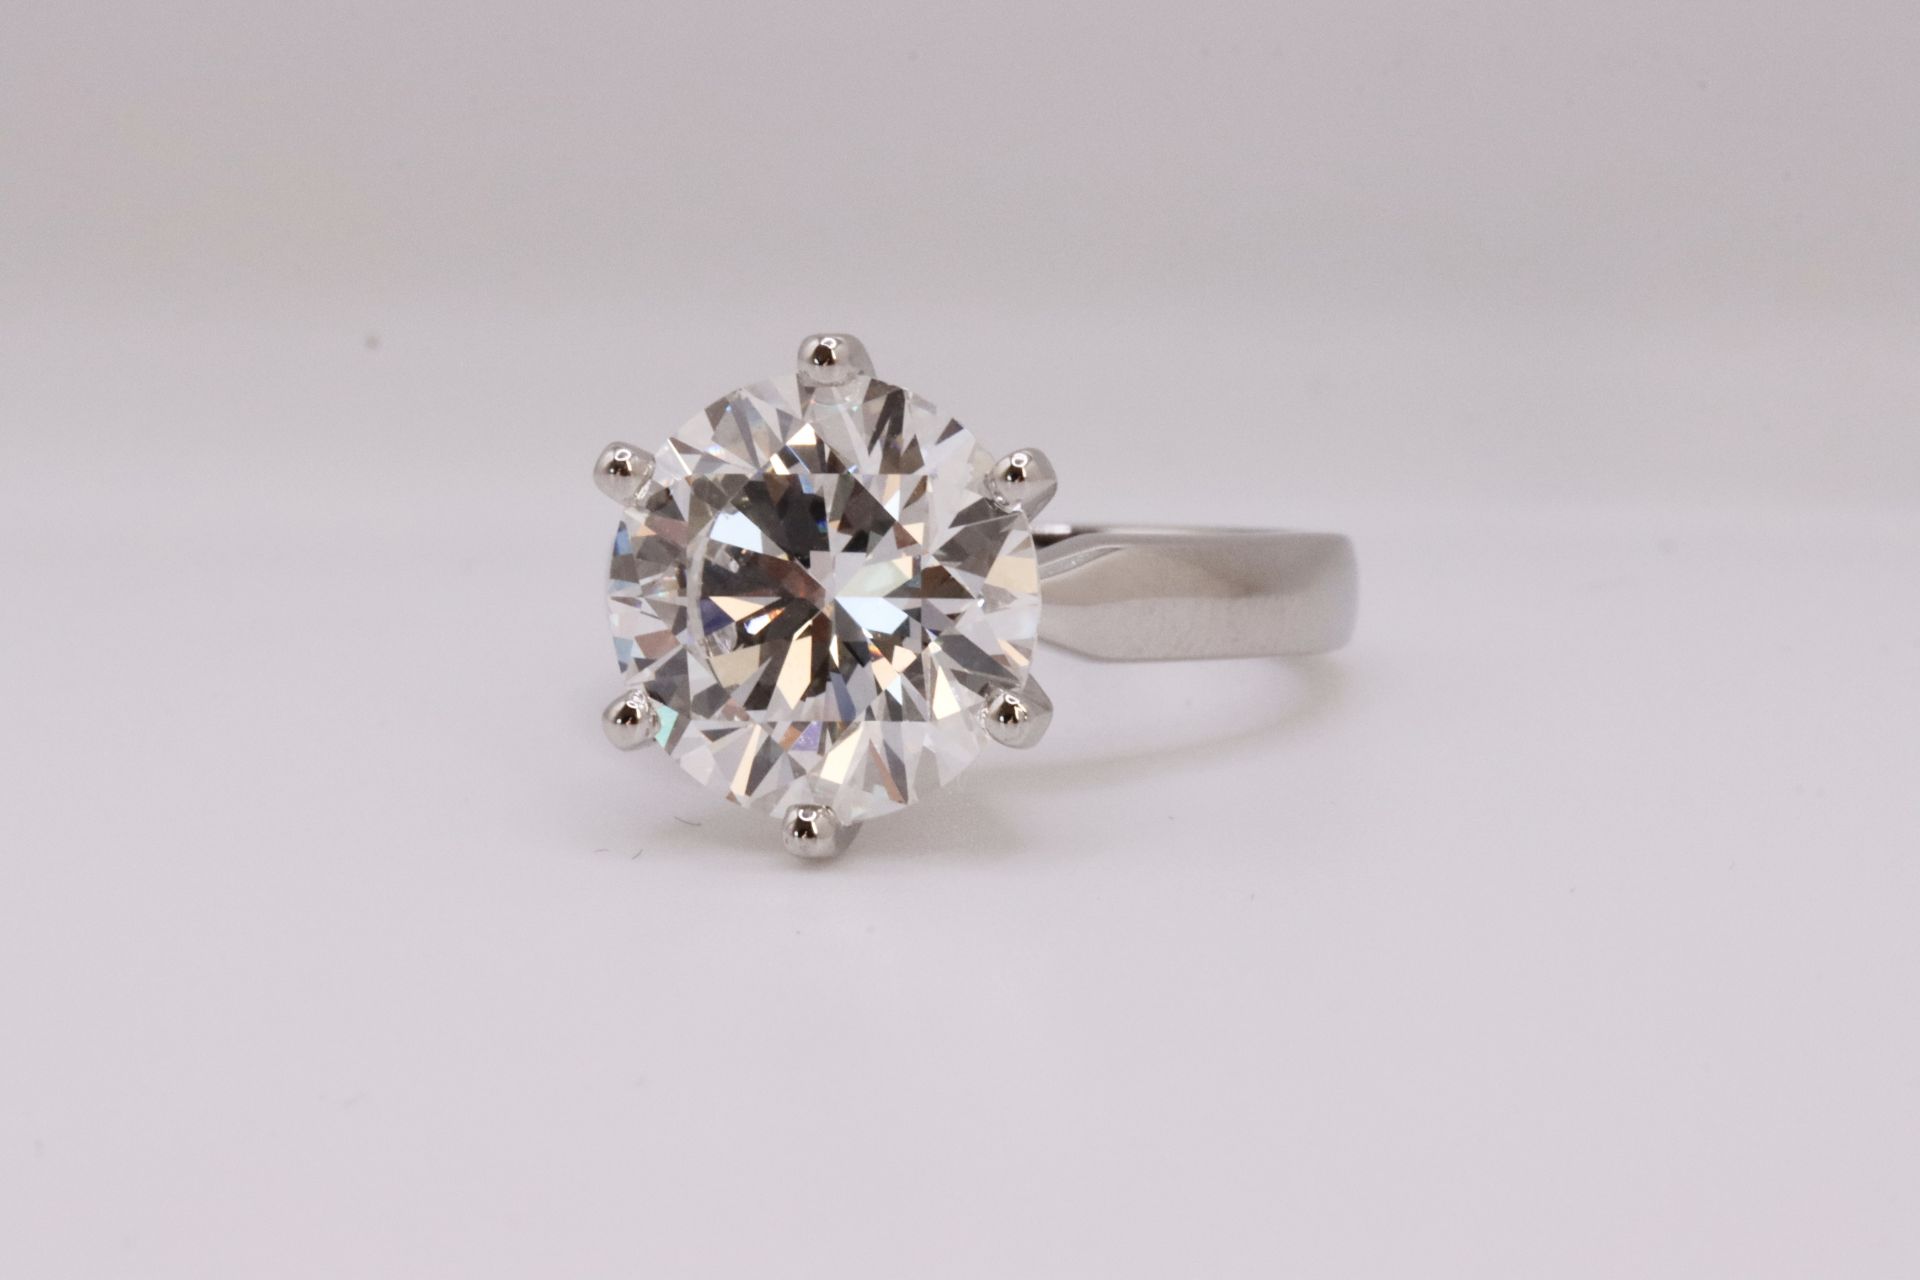 ** ON SALE ** Round Brilliant Cut Diamond Platinum Ring 5.00 Carat F Colour VS2 Clarity IDEAL - Image 3 of 8